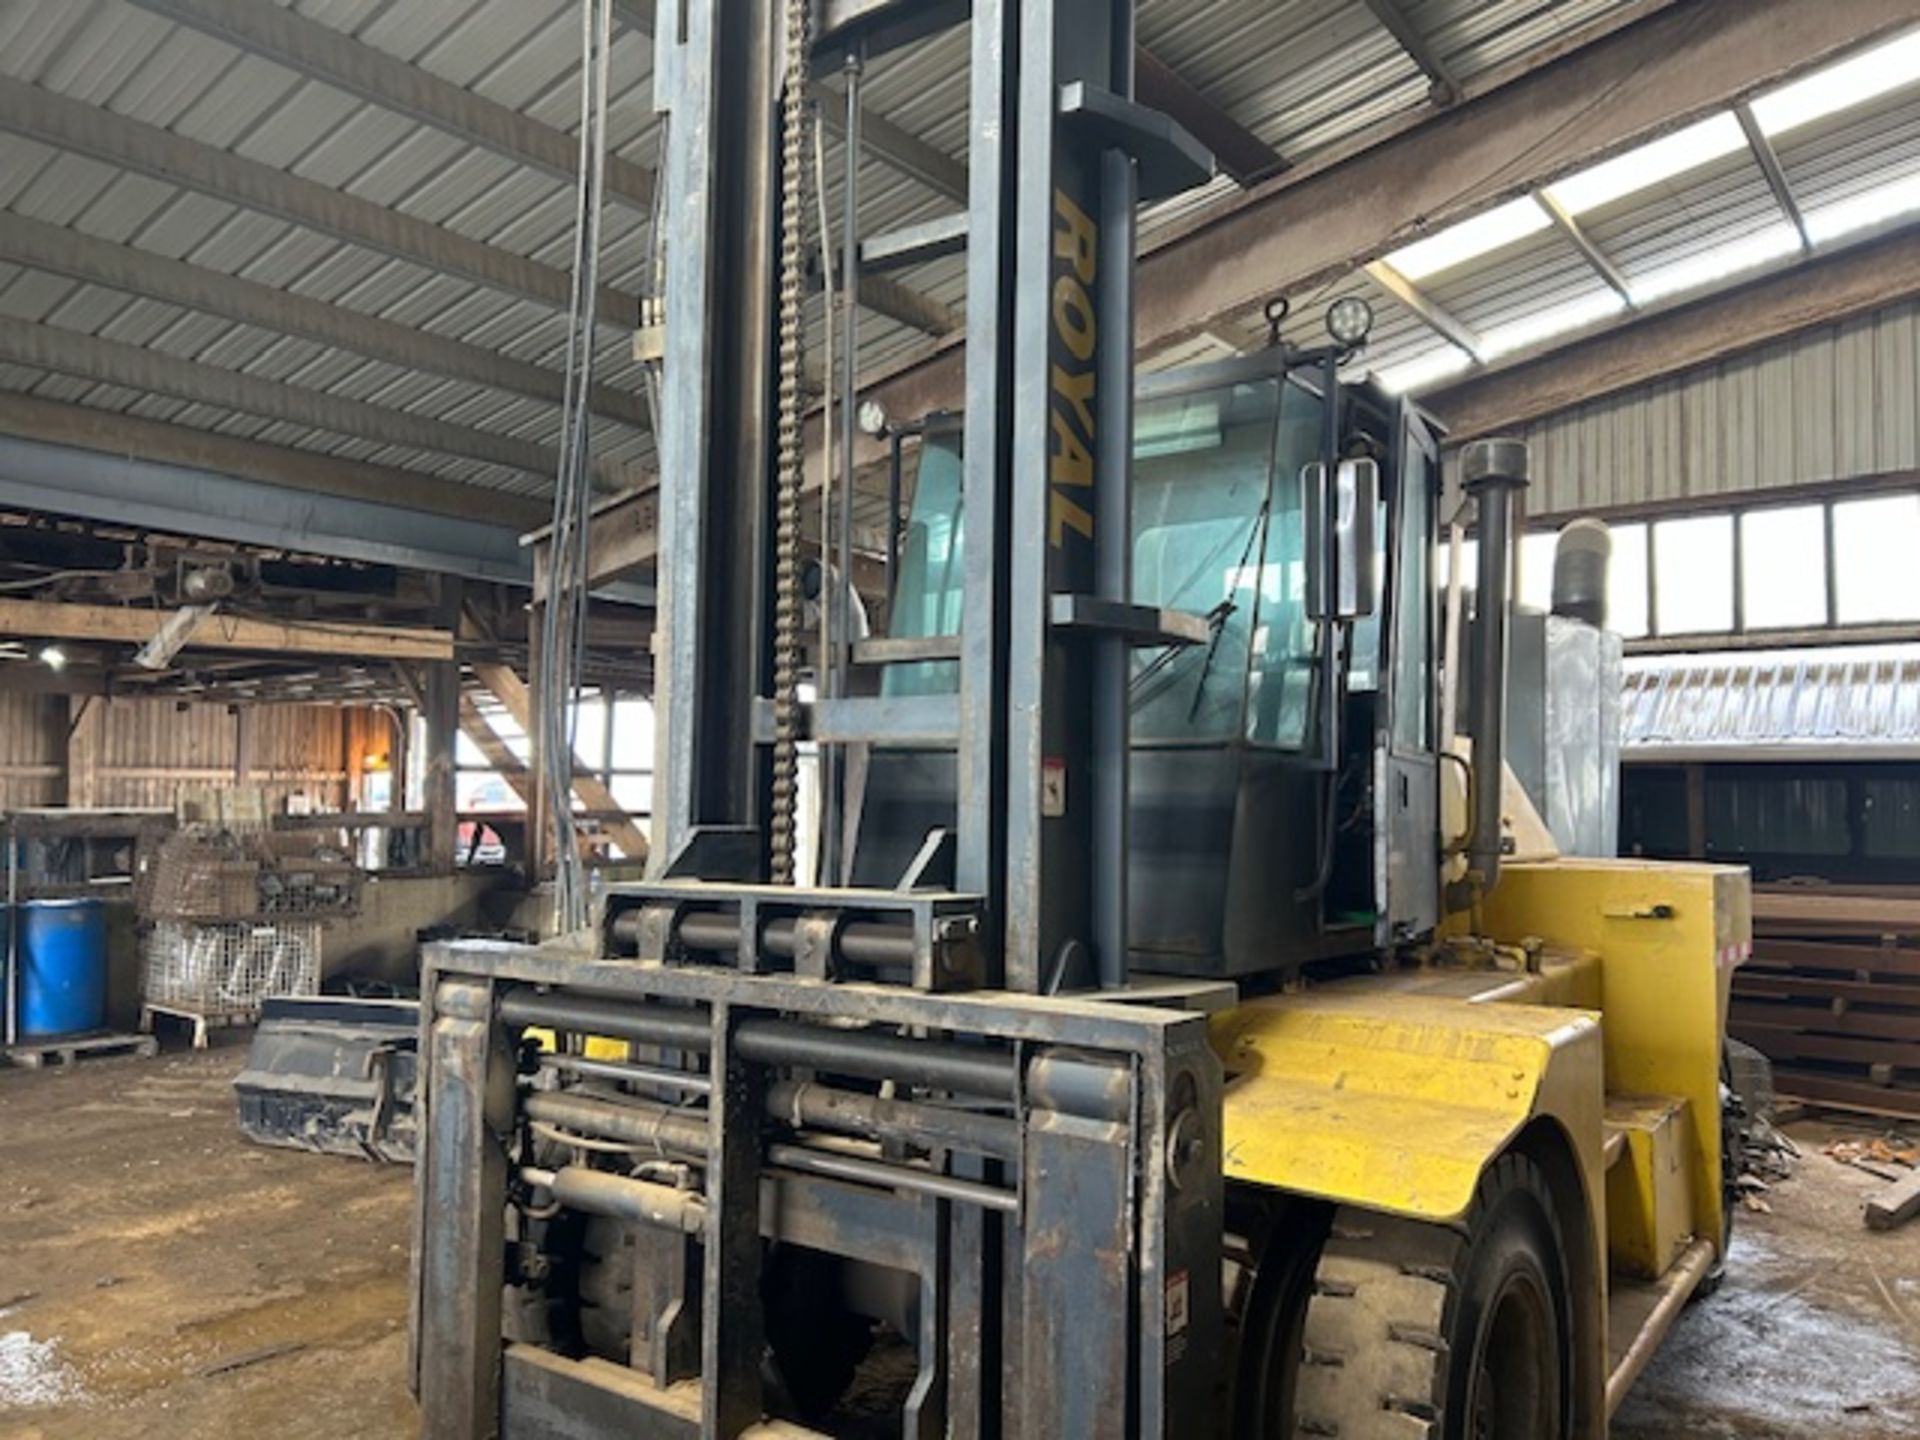 Royal P300 30,000 lb Forklift, 117" Lft Ht, 2 Stage Mast (LOCATION: Minster, OHIO) - Image 2 of 6